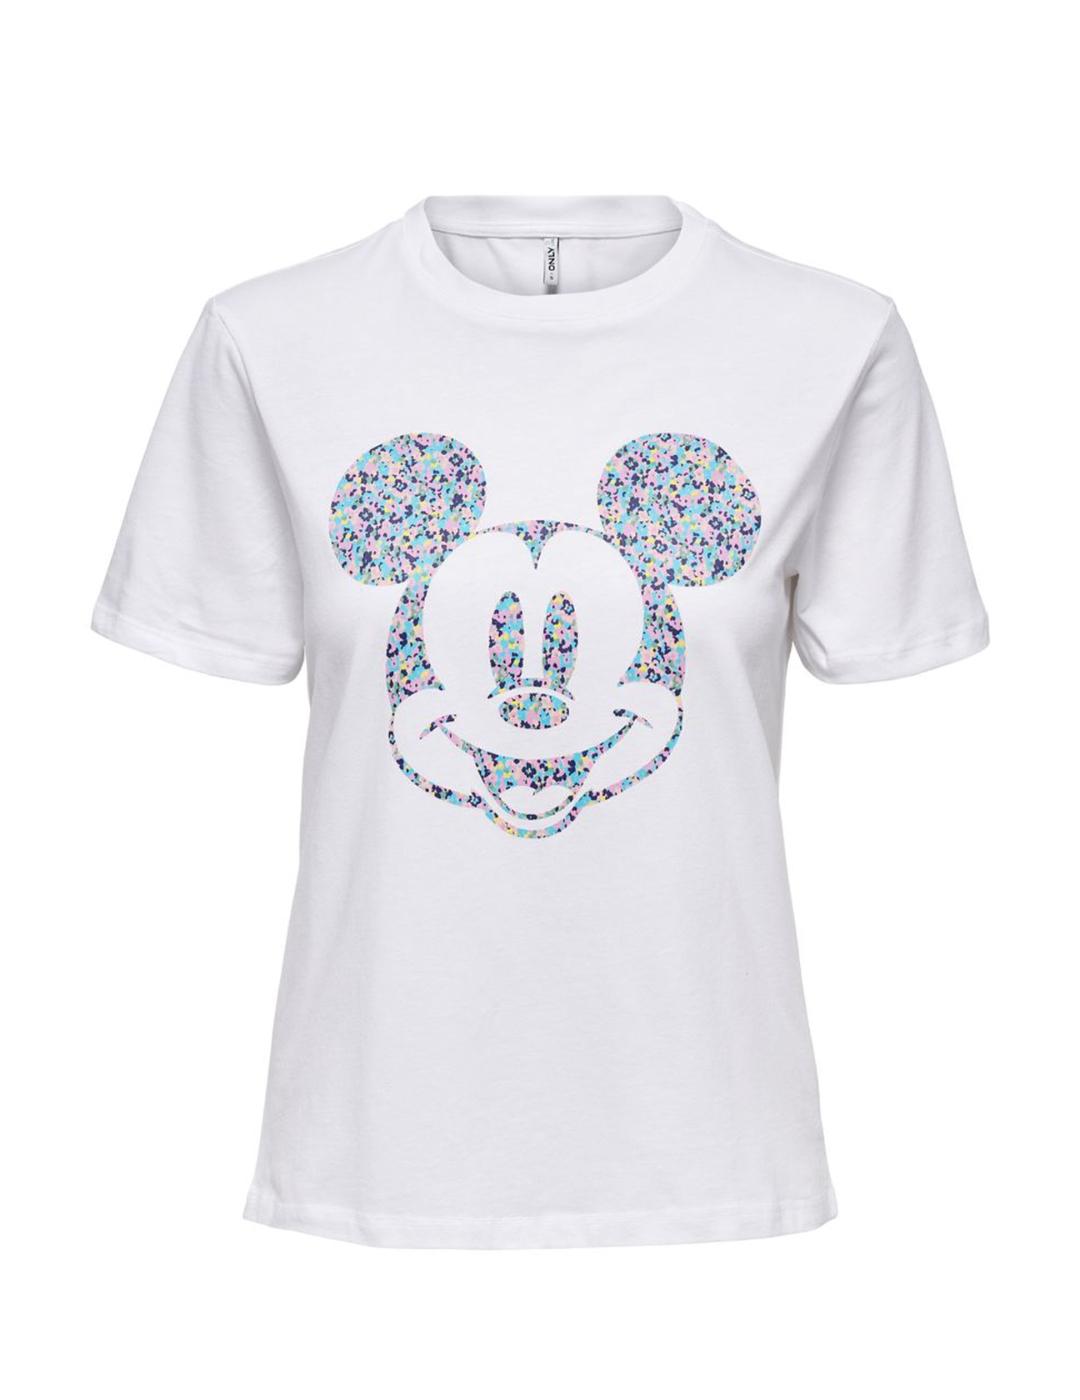 Camiseta Only Disney life blanca para mujer-a